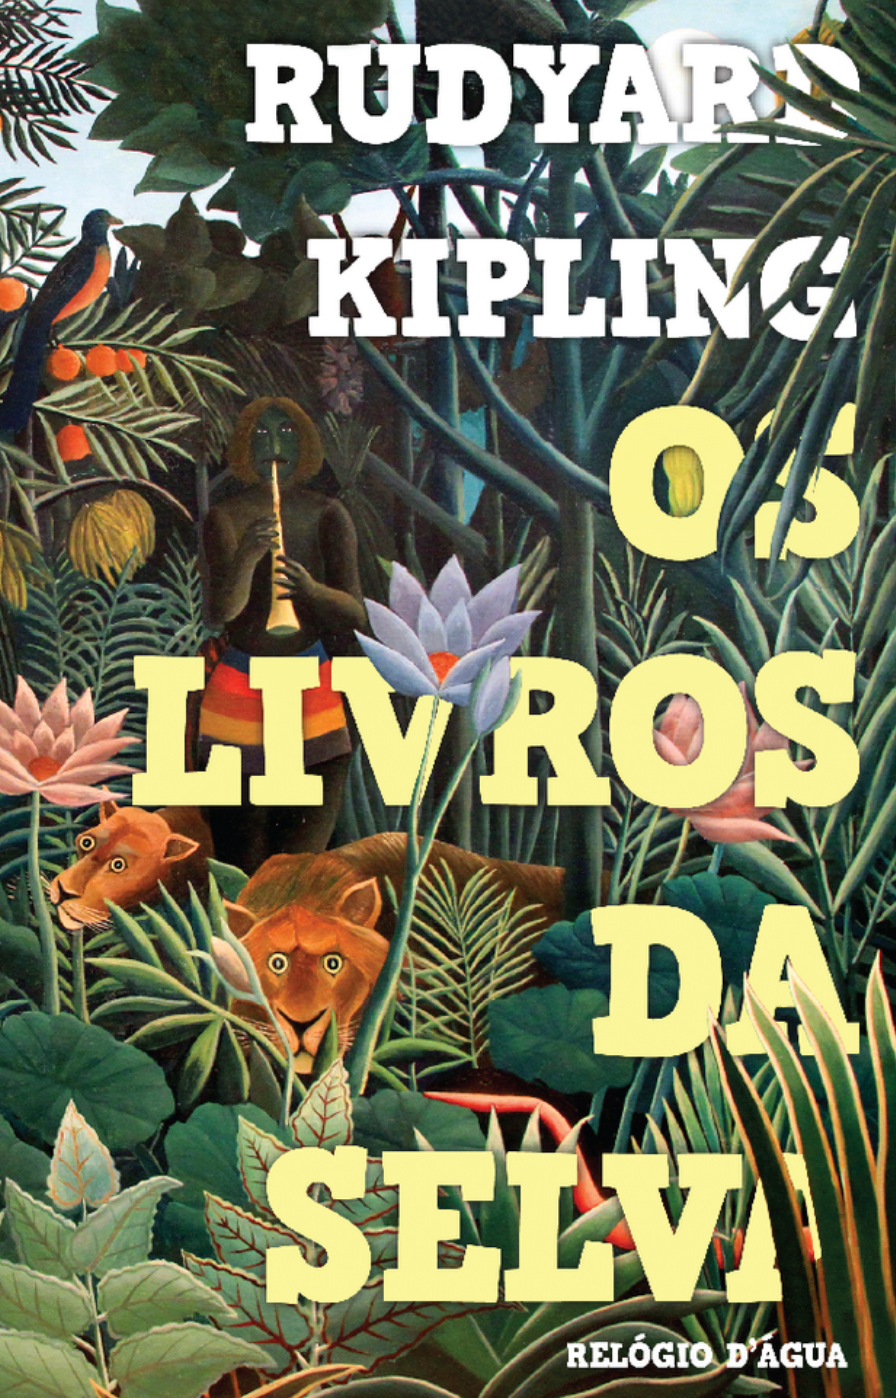 The Jungle Books, Rudyard Kipling